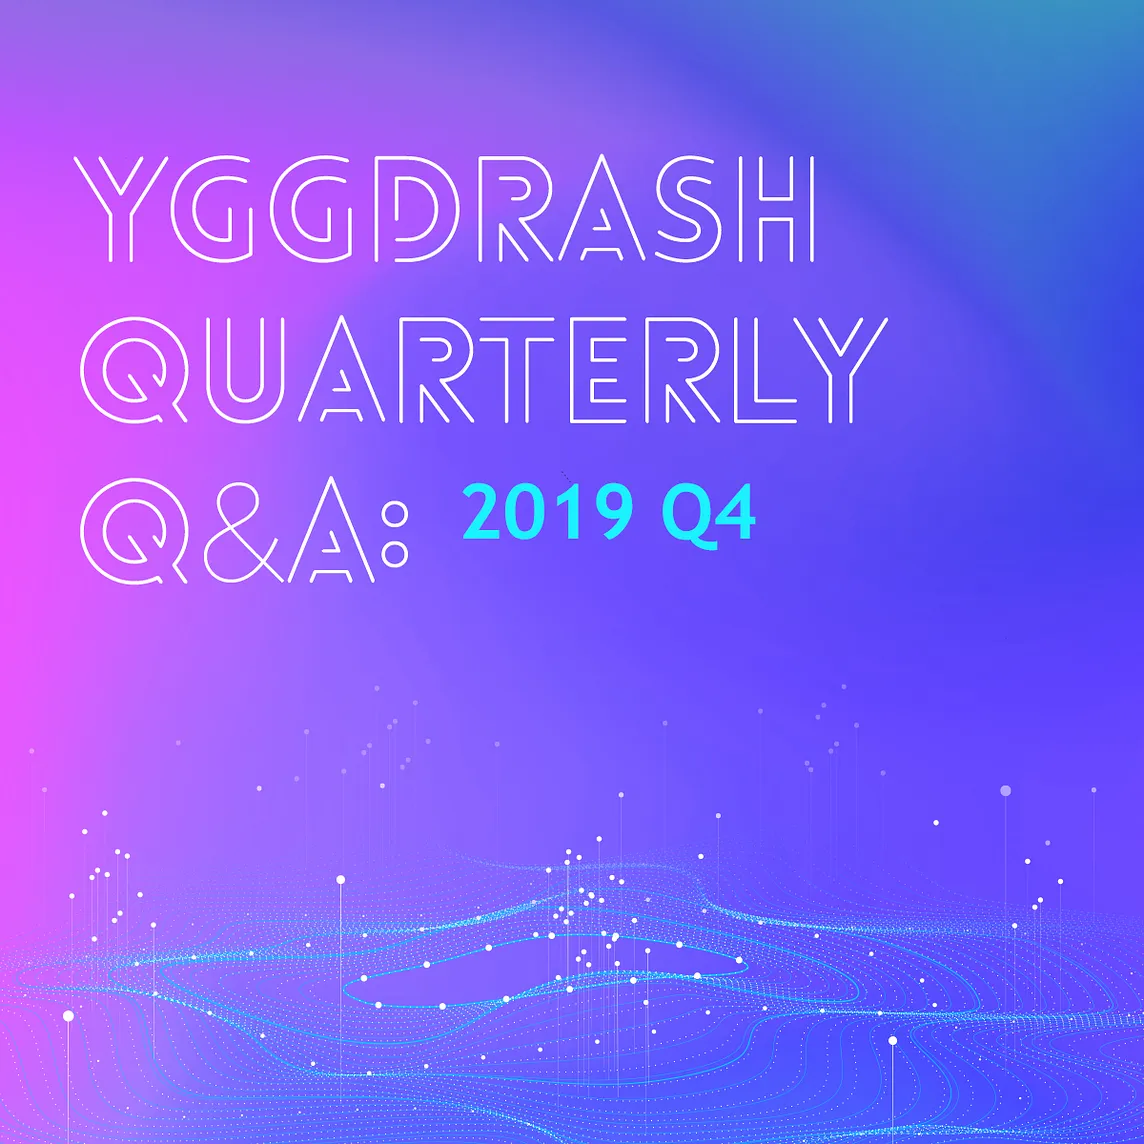 YGGDRASH Quarterly Q&A: 2019 Q4